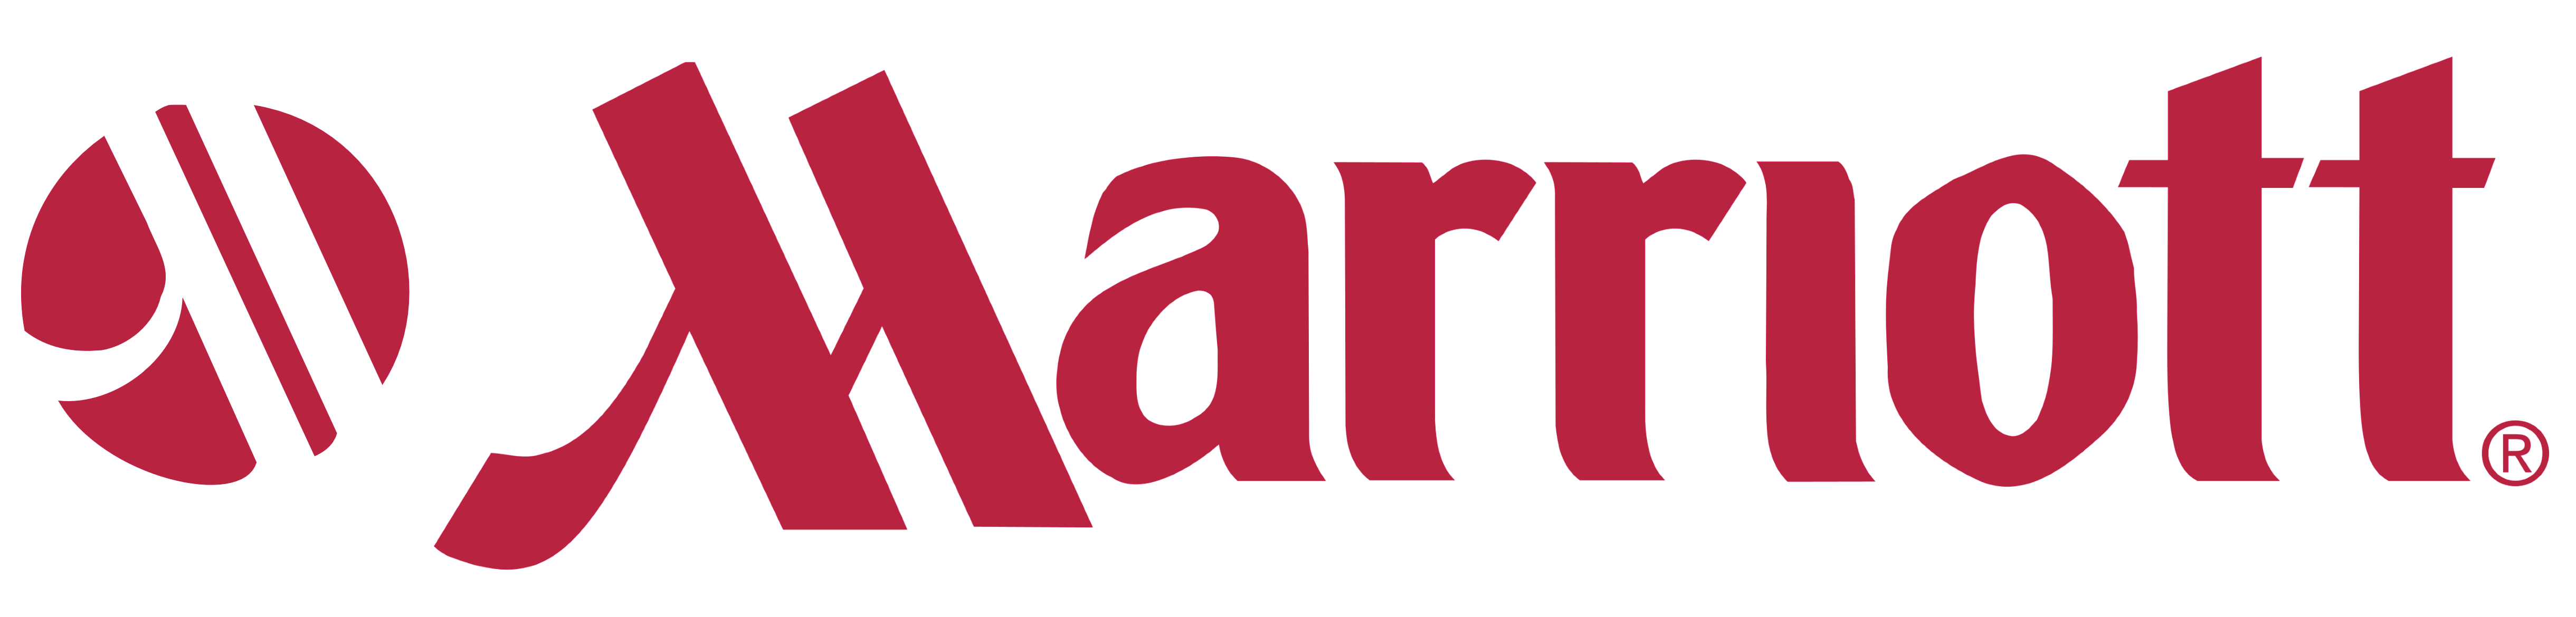 hotel marriott logo png #41809